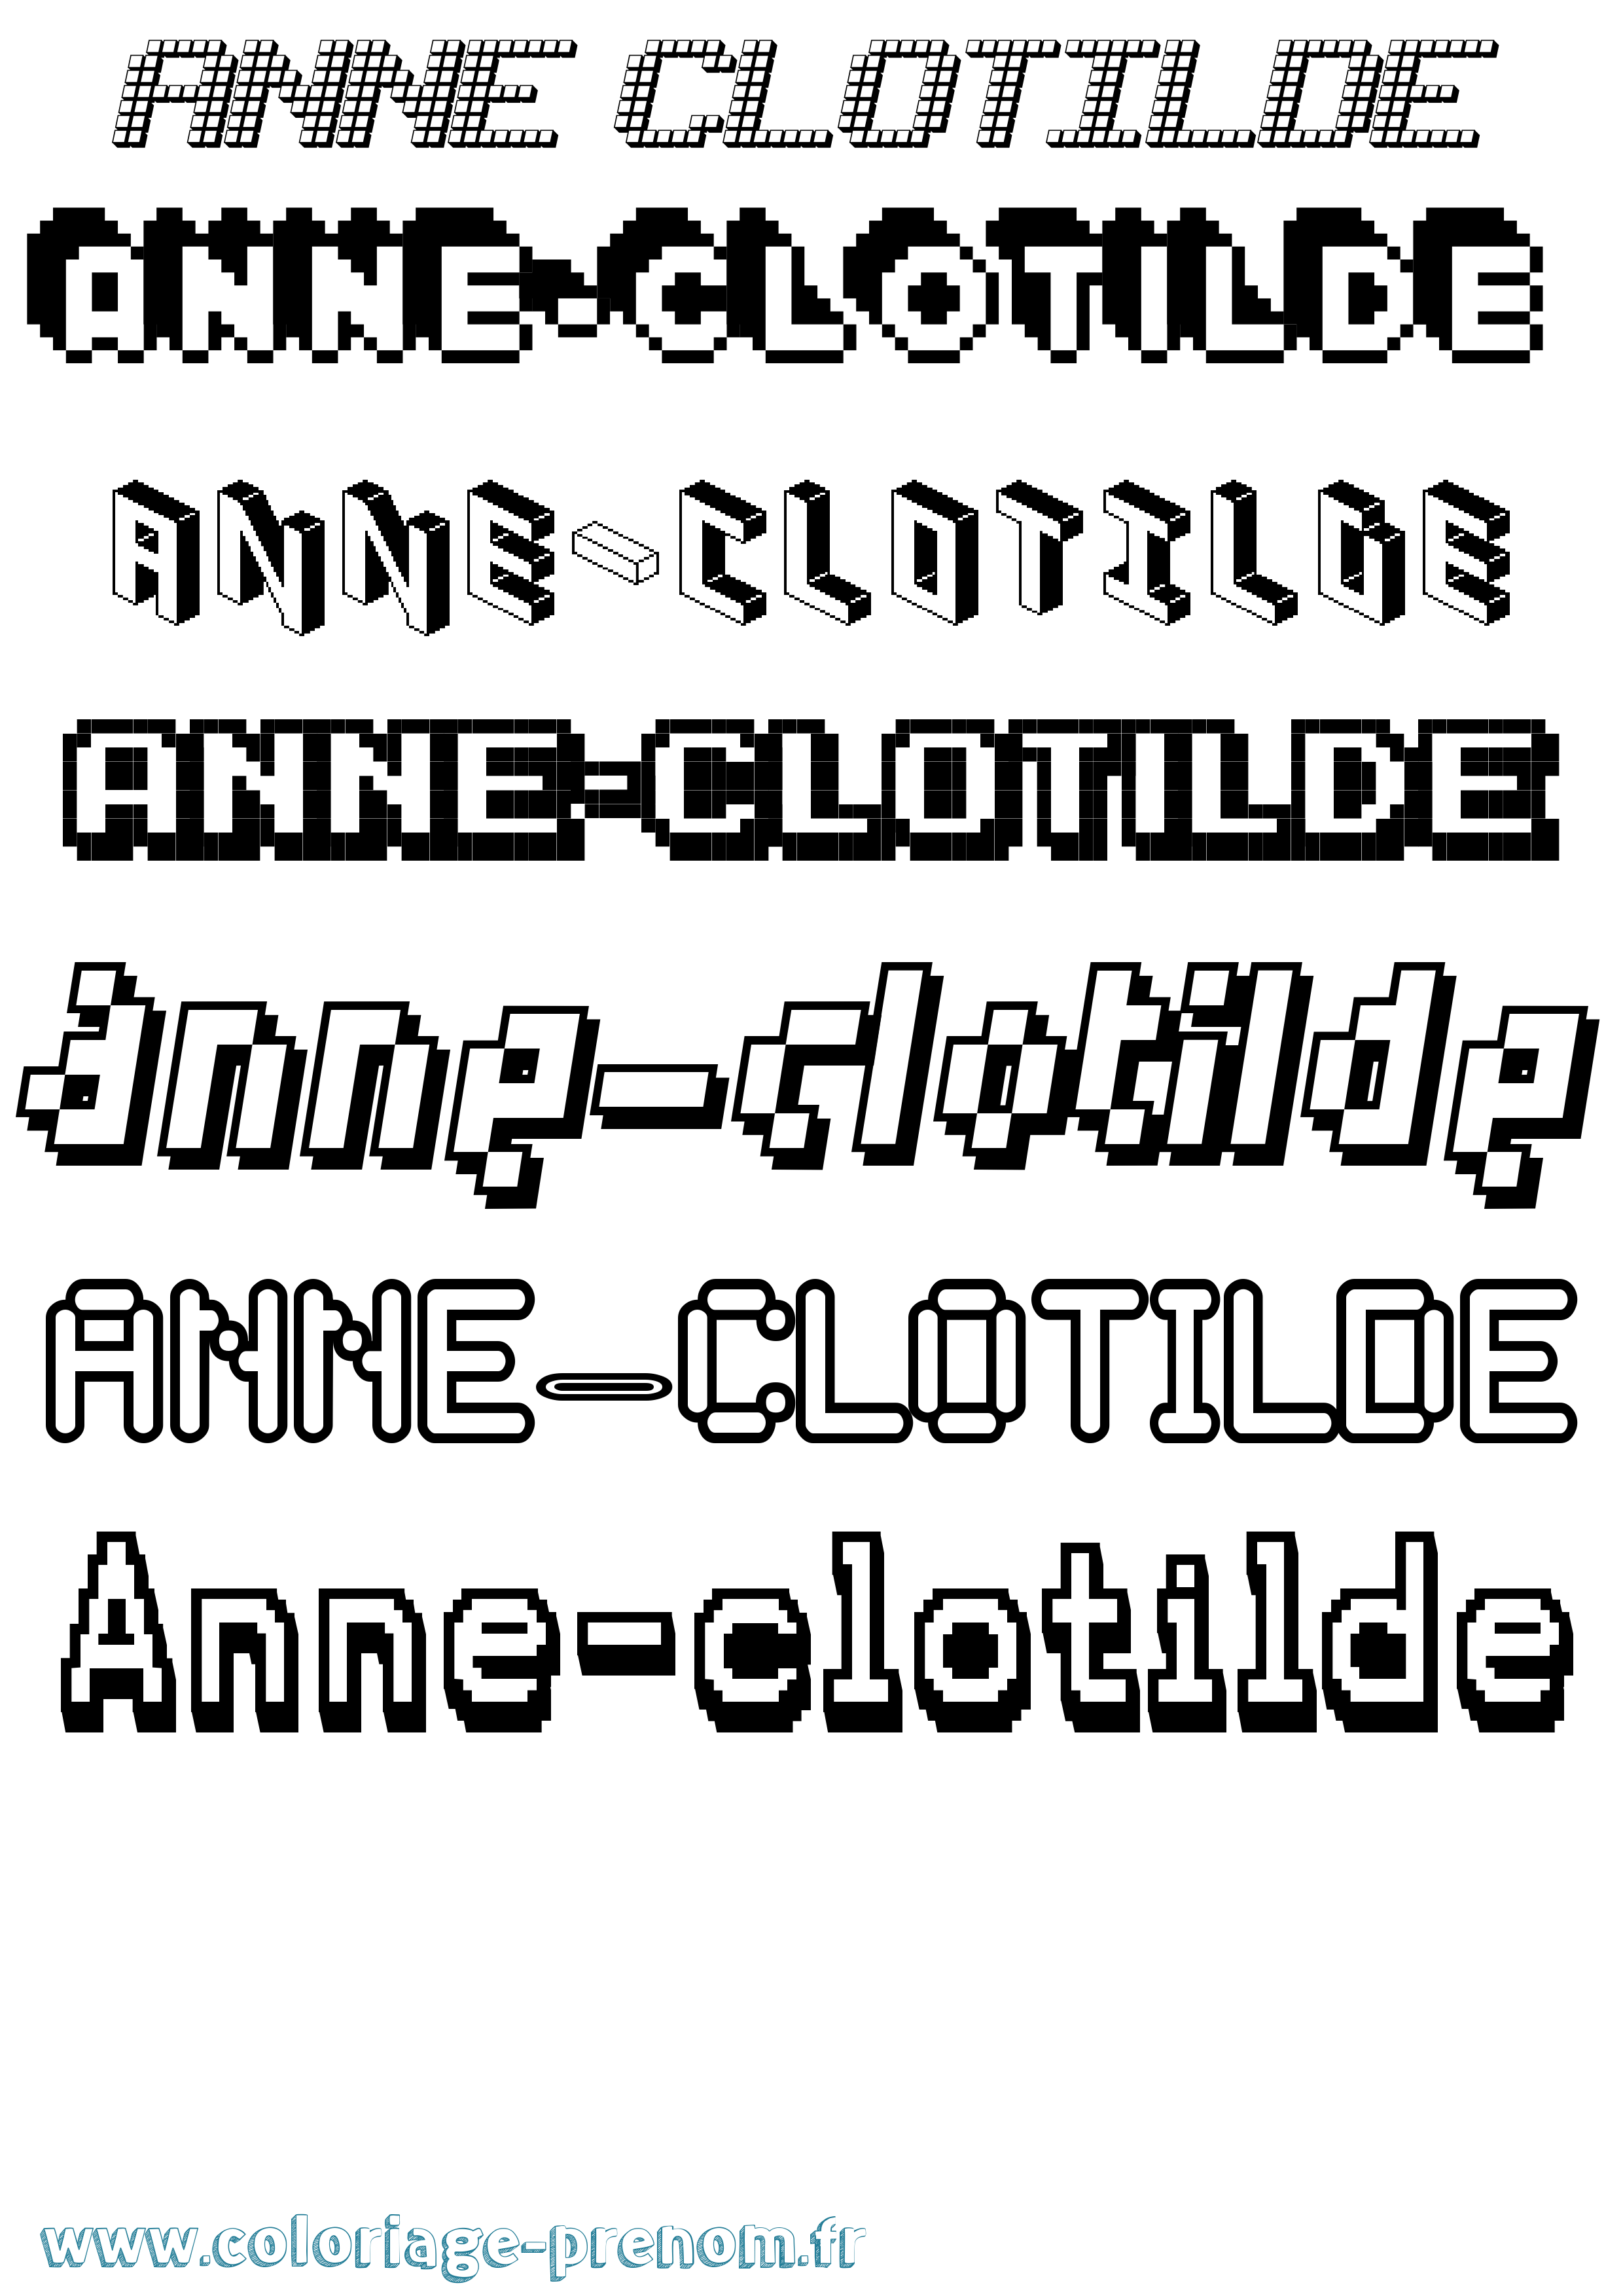 Coloriage prénom Anne-Clotilde Pixel